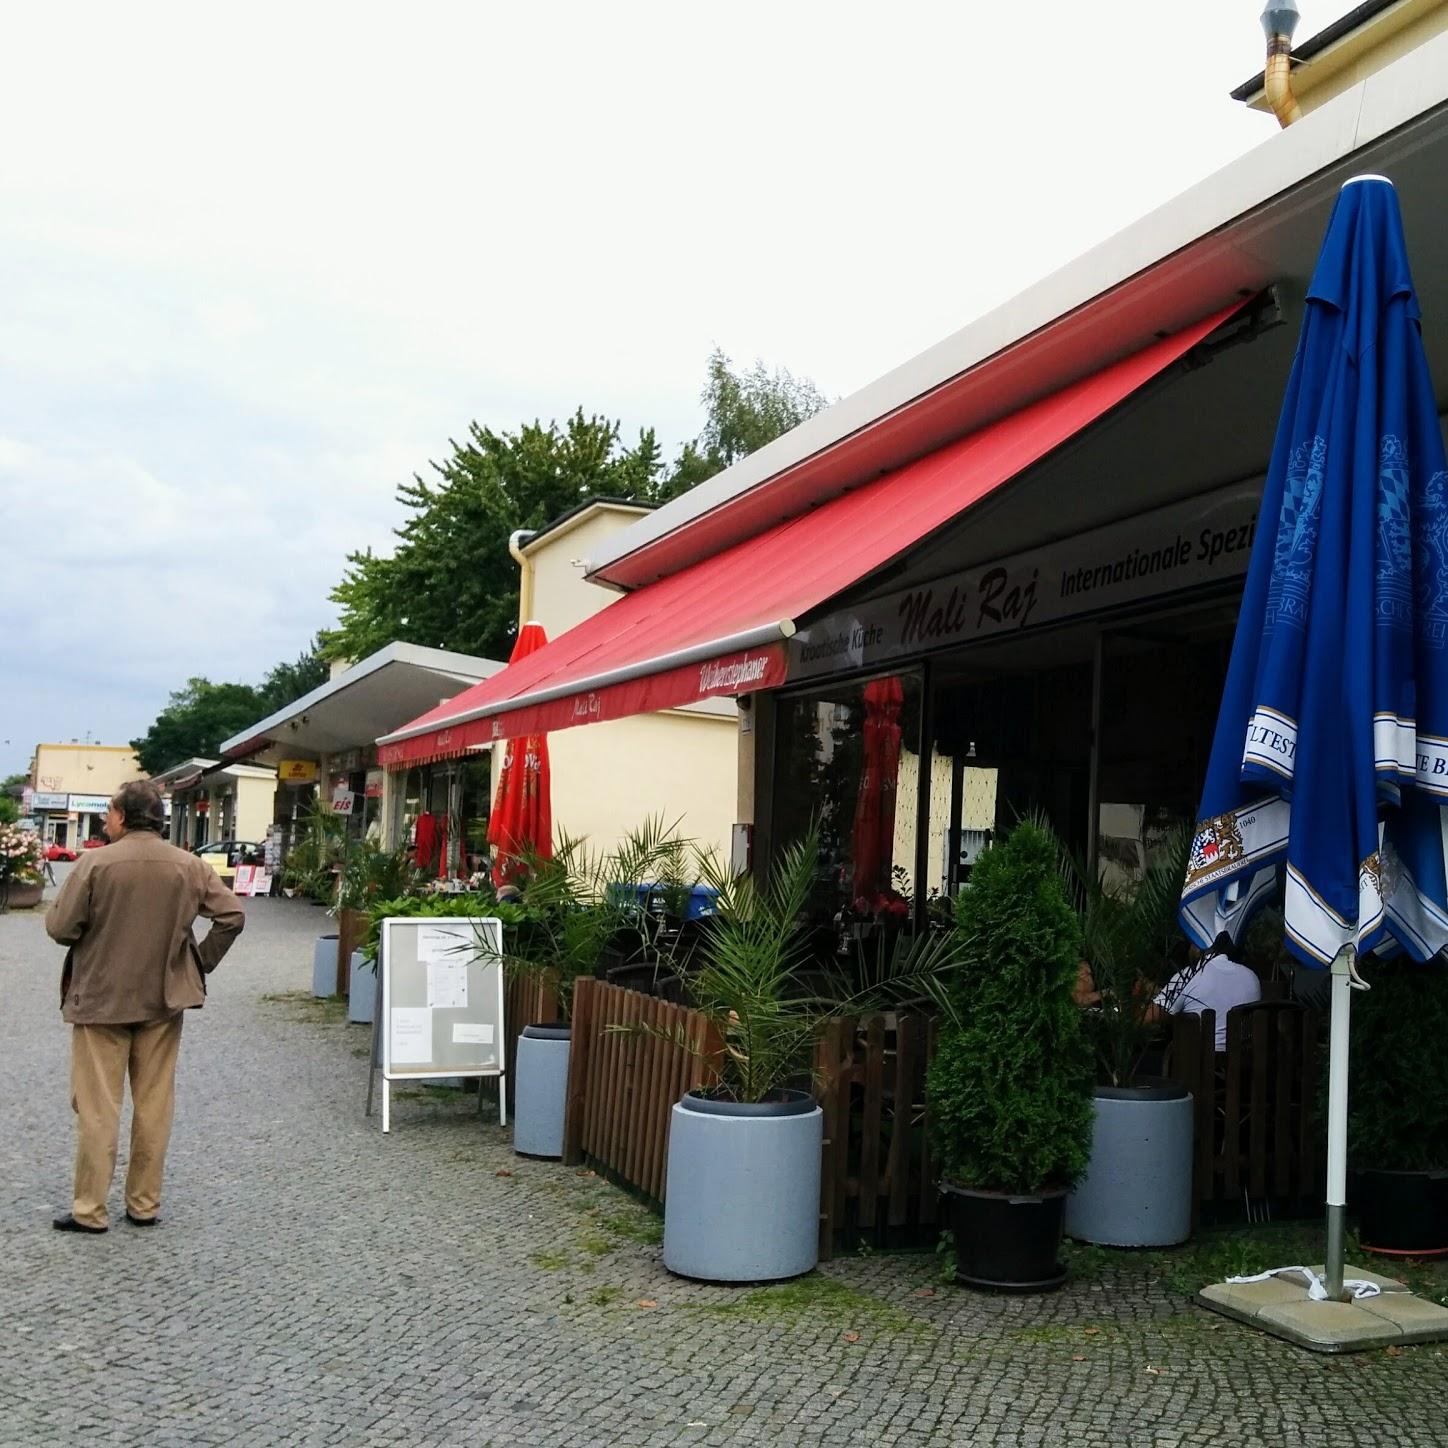 Restaurant "Mali Raj" in  Berlin